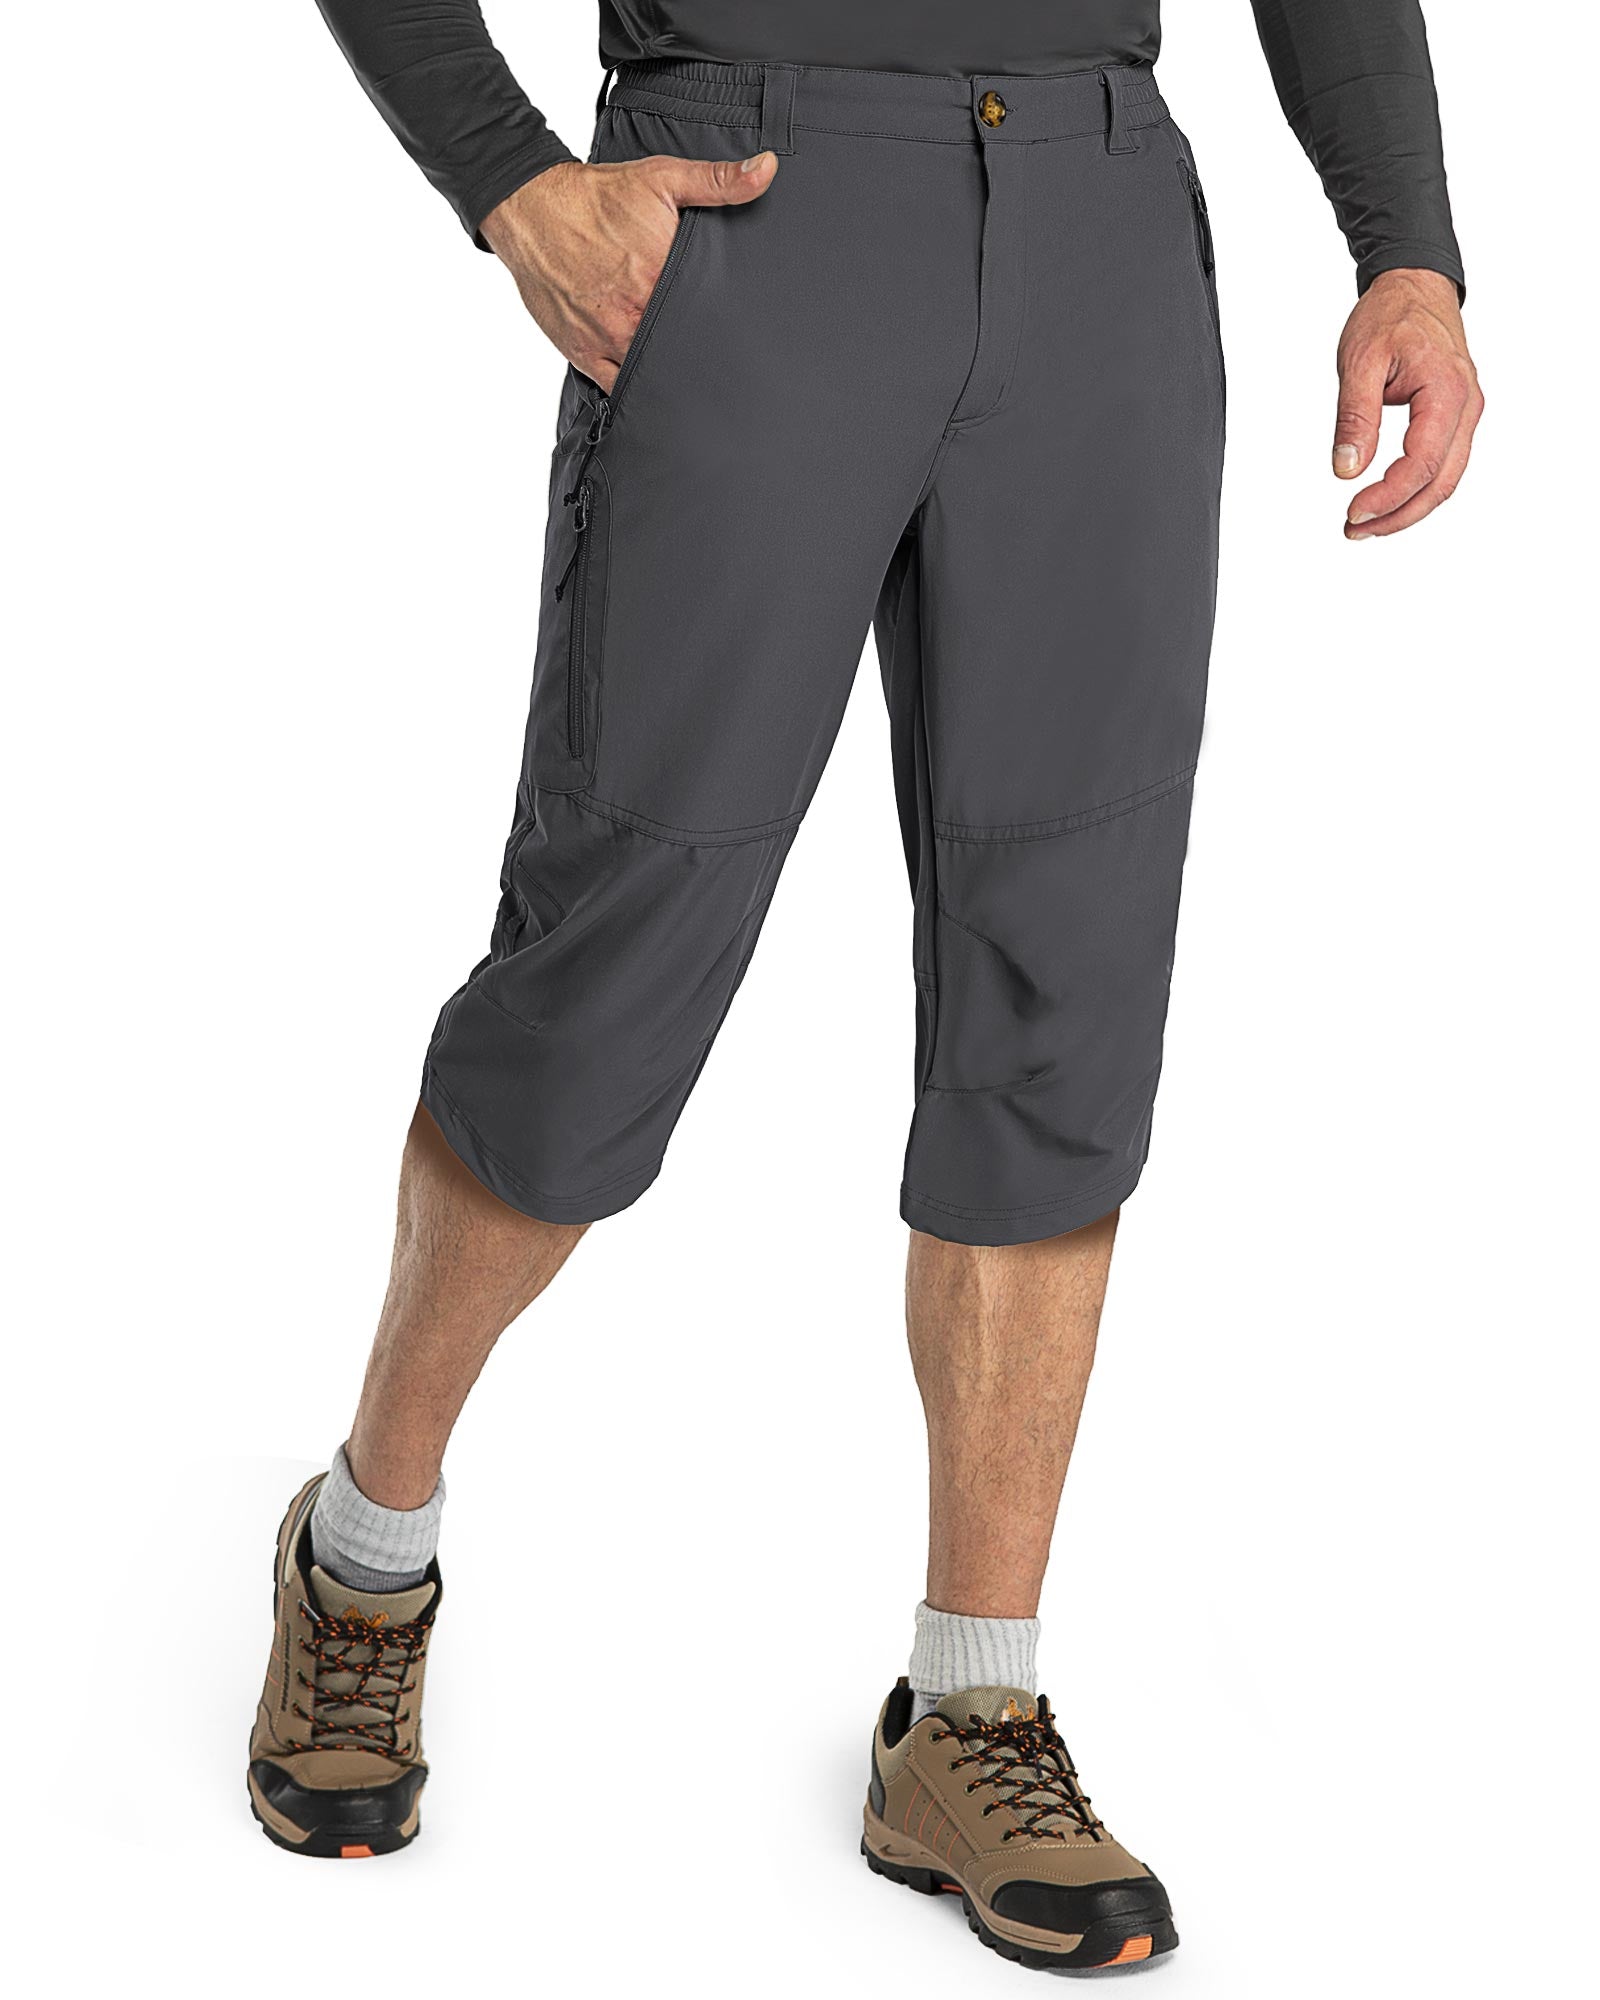 Mens 3/4 Trousers Shorts mesh Lining Bottoms One Stripe Sweat Pants Joggers  Jogging Gym (Black with White Stripe, Small) : Amazon.co.uk: Fashion